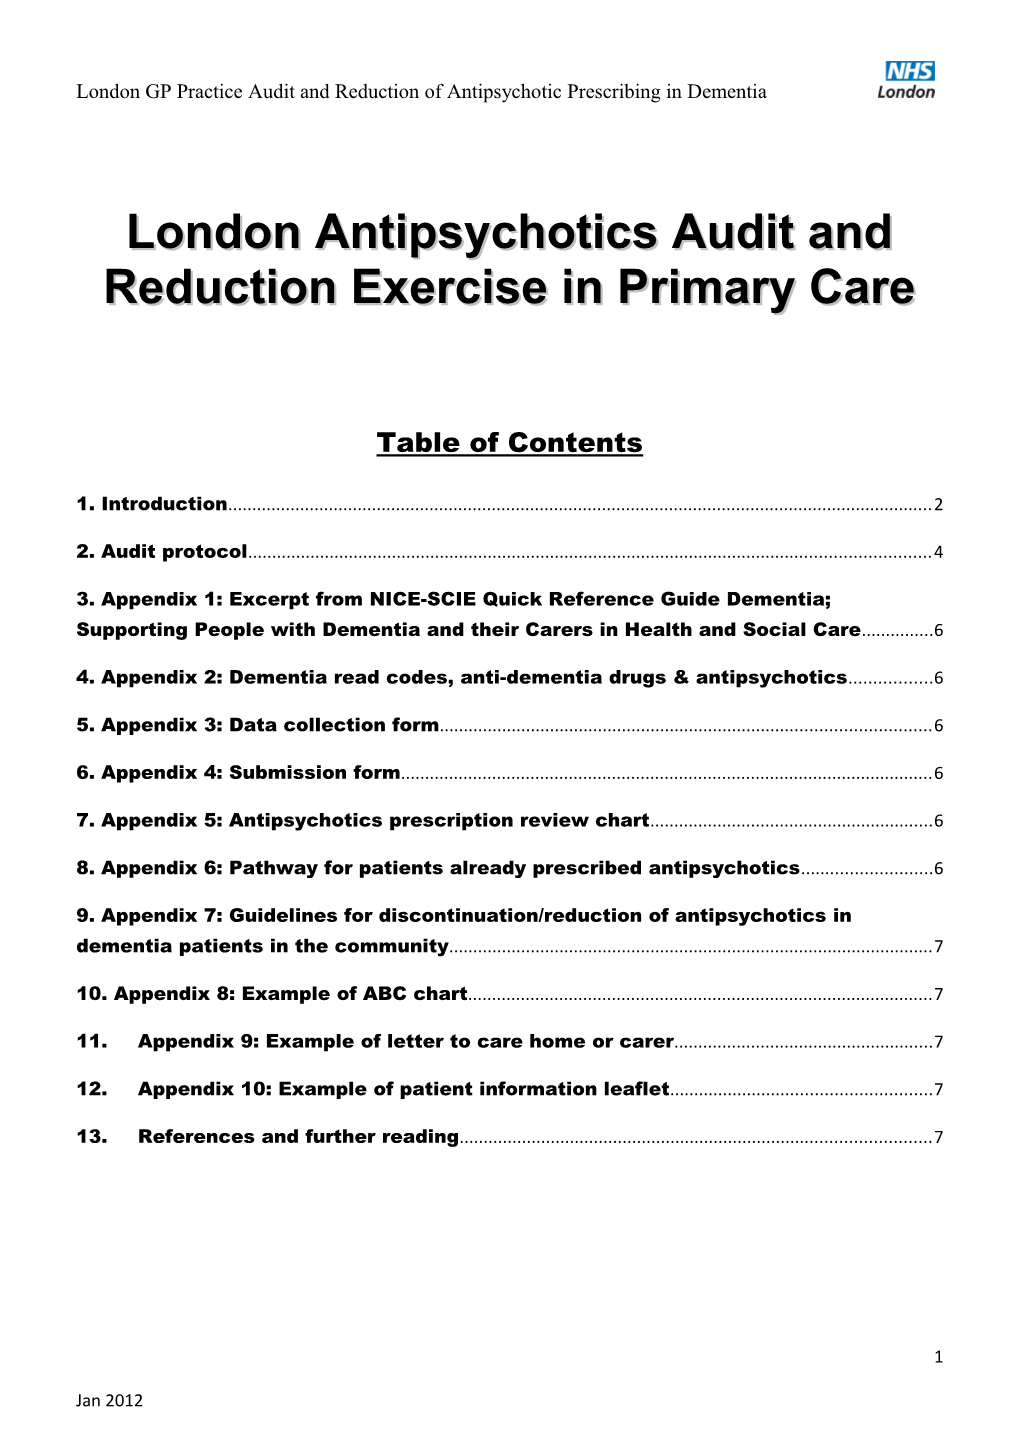 London GP Practice Audit of Antipsychotic Prescribing to People with Dementia